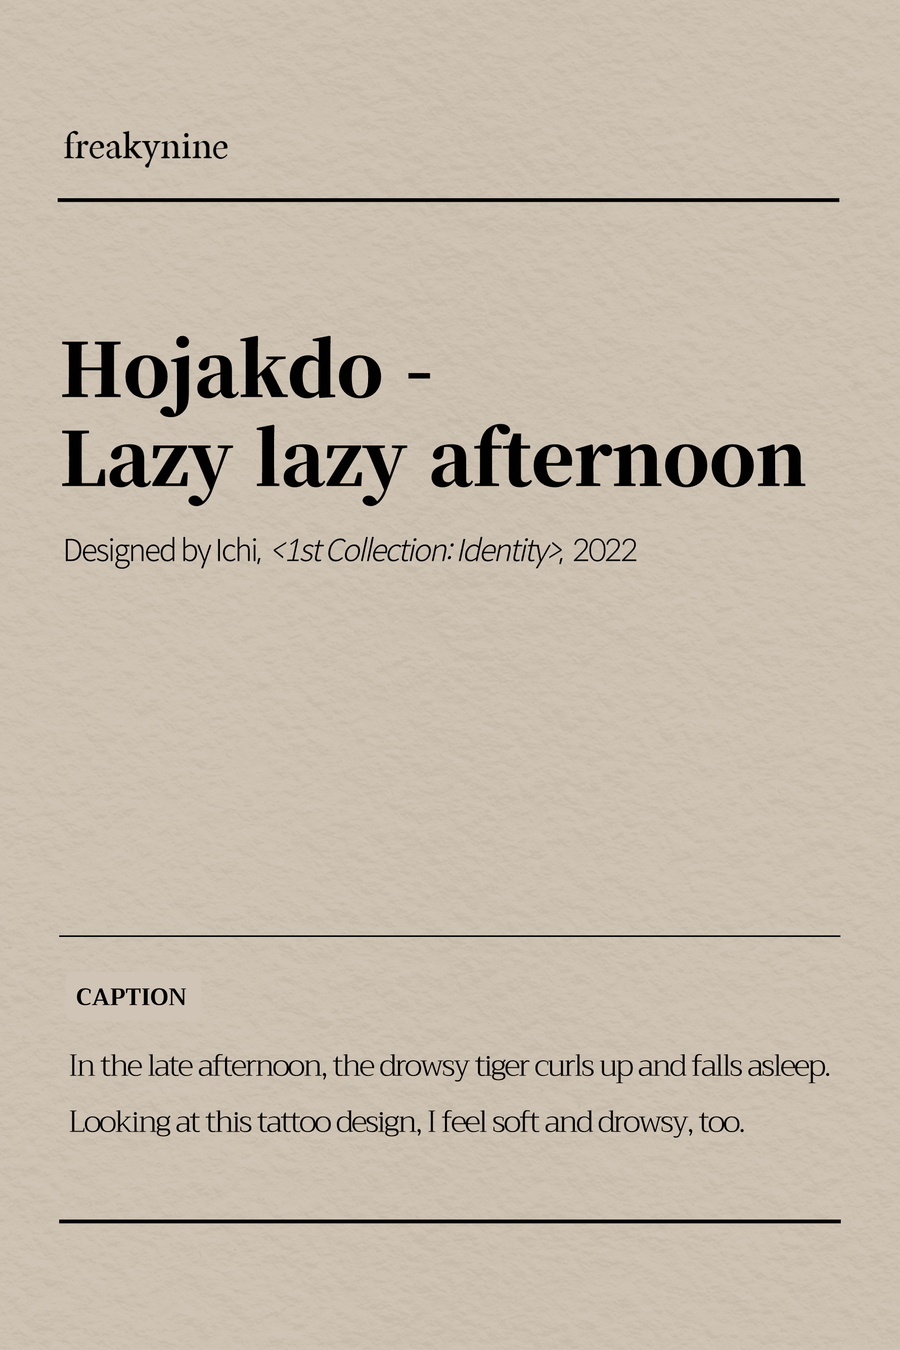 (Ichi) Hojakdo - Lazy lazy afternoon (2EA) - freakynine